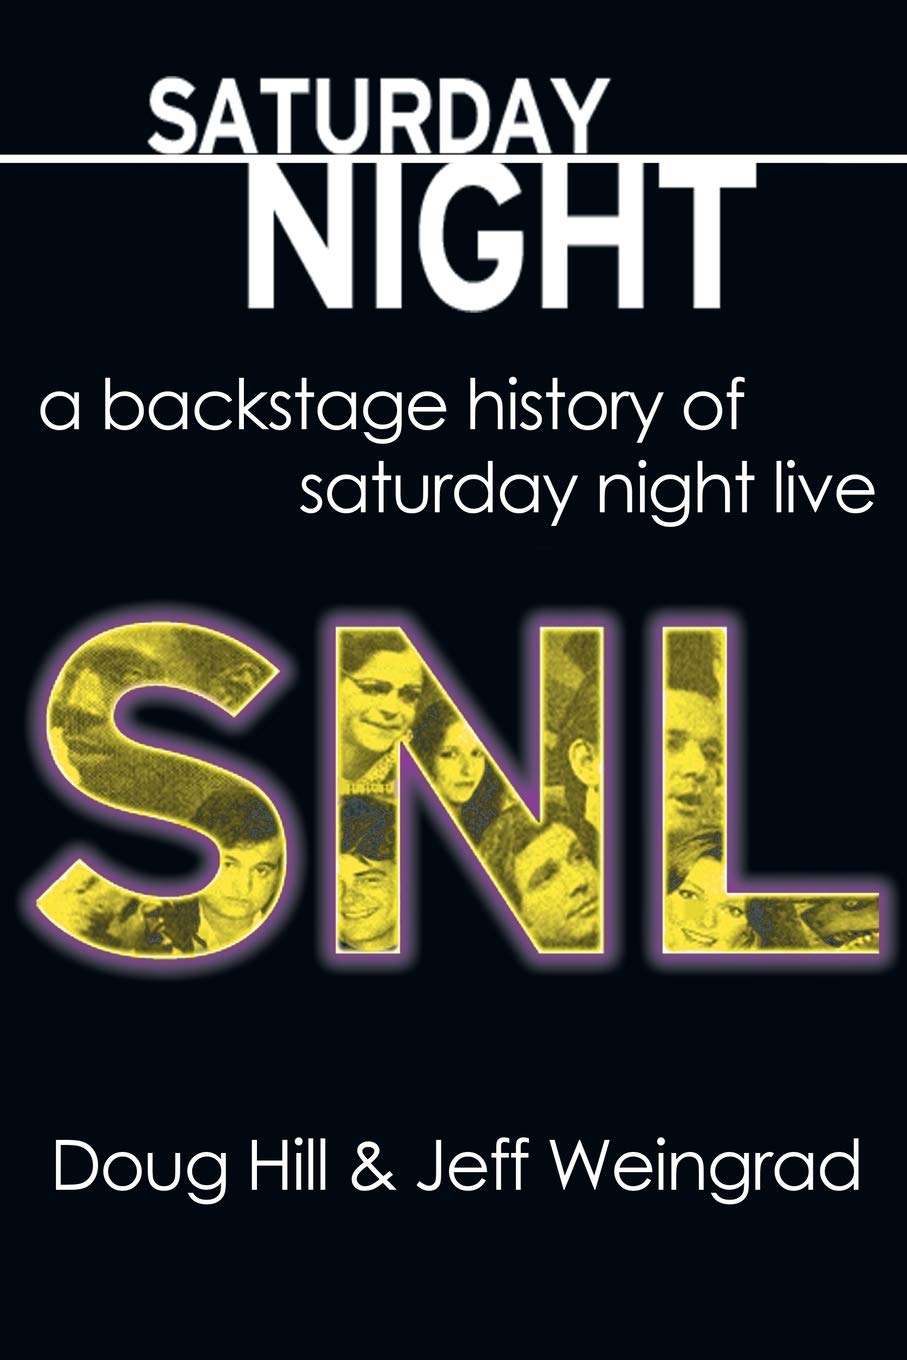 TSaturday Night: A Backstage History of Saturday Night Live